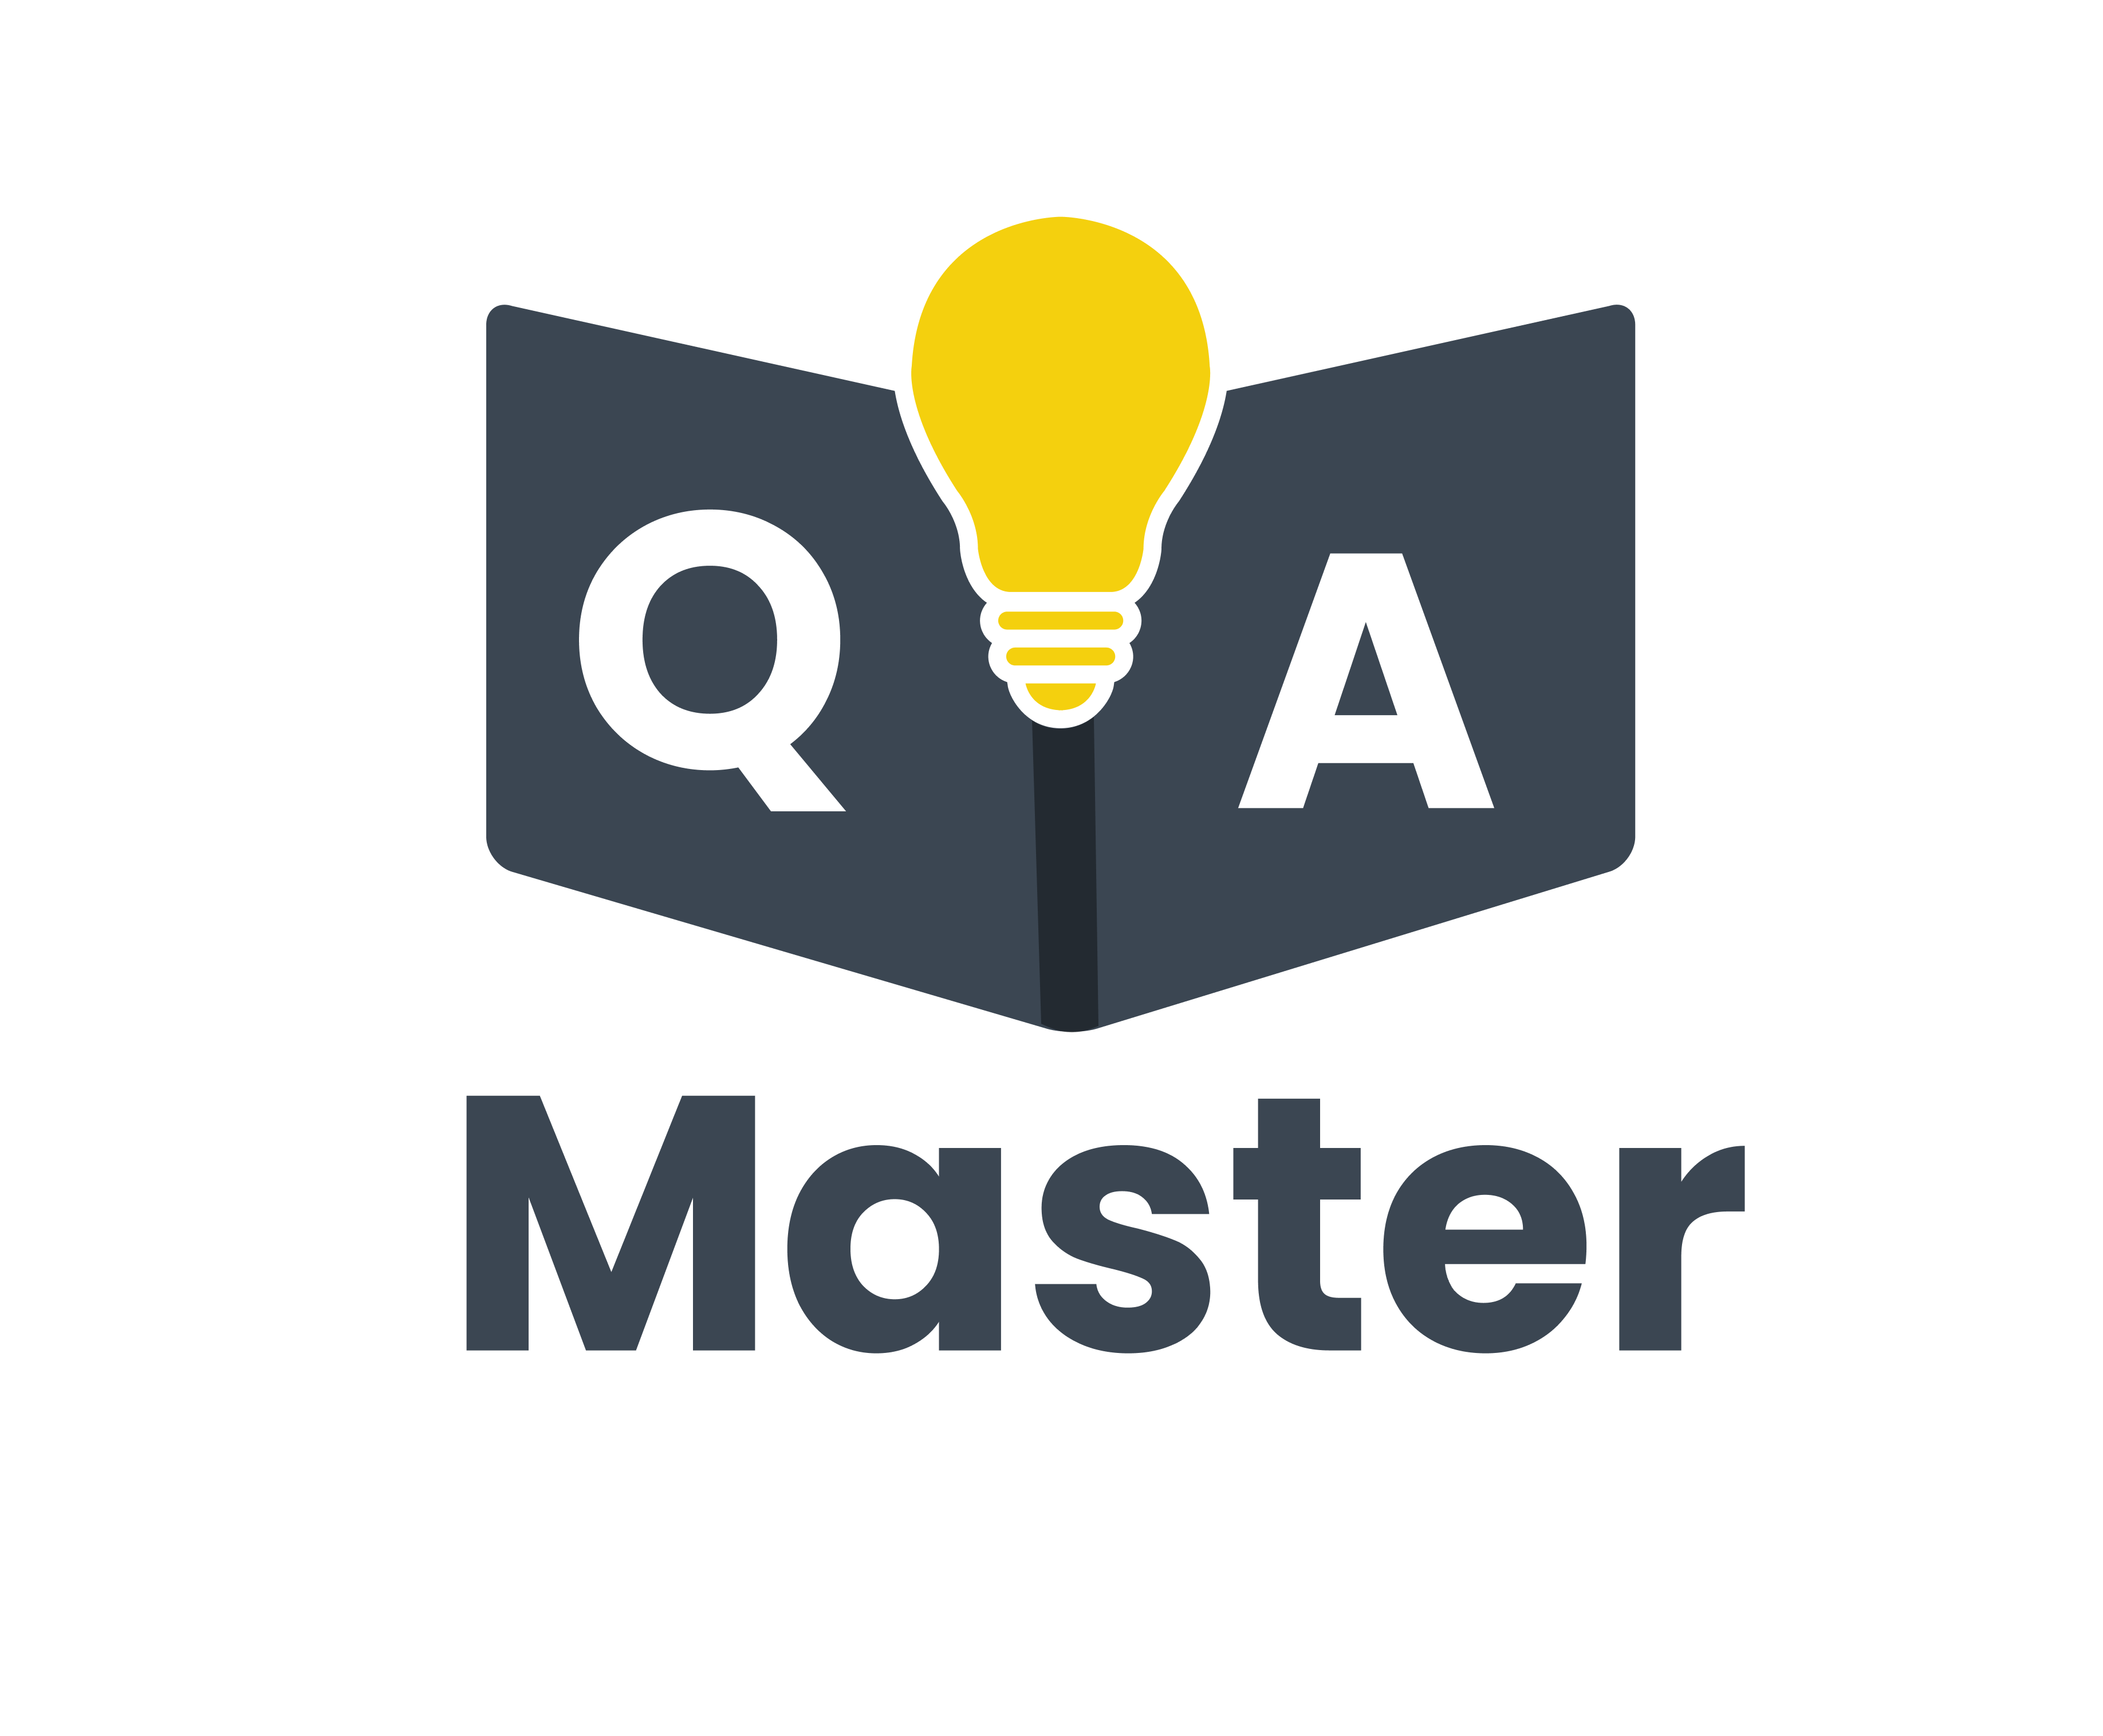 Q&A Master logo